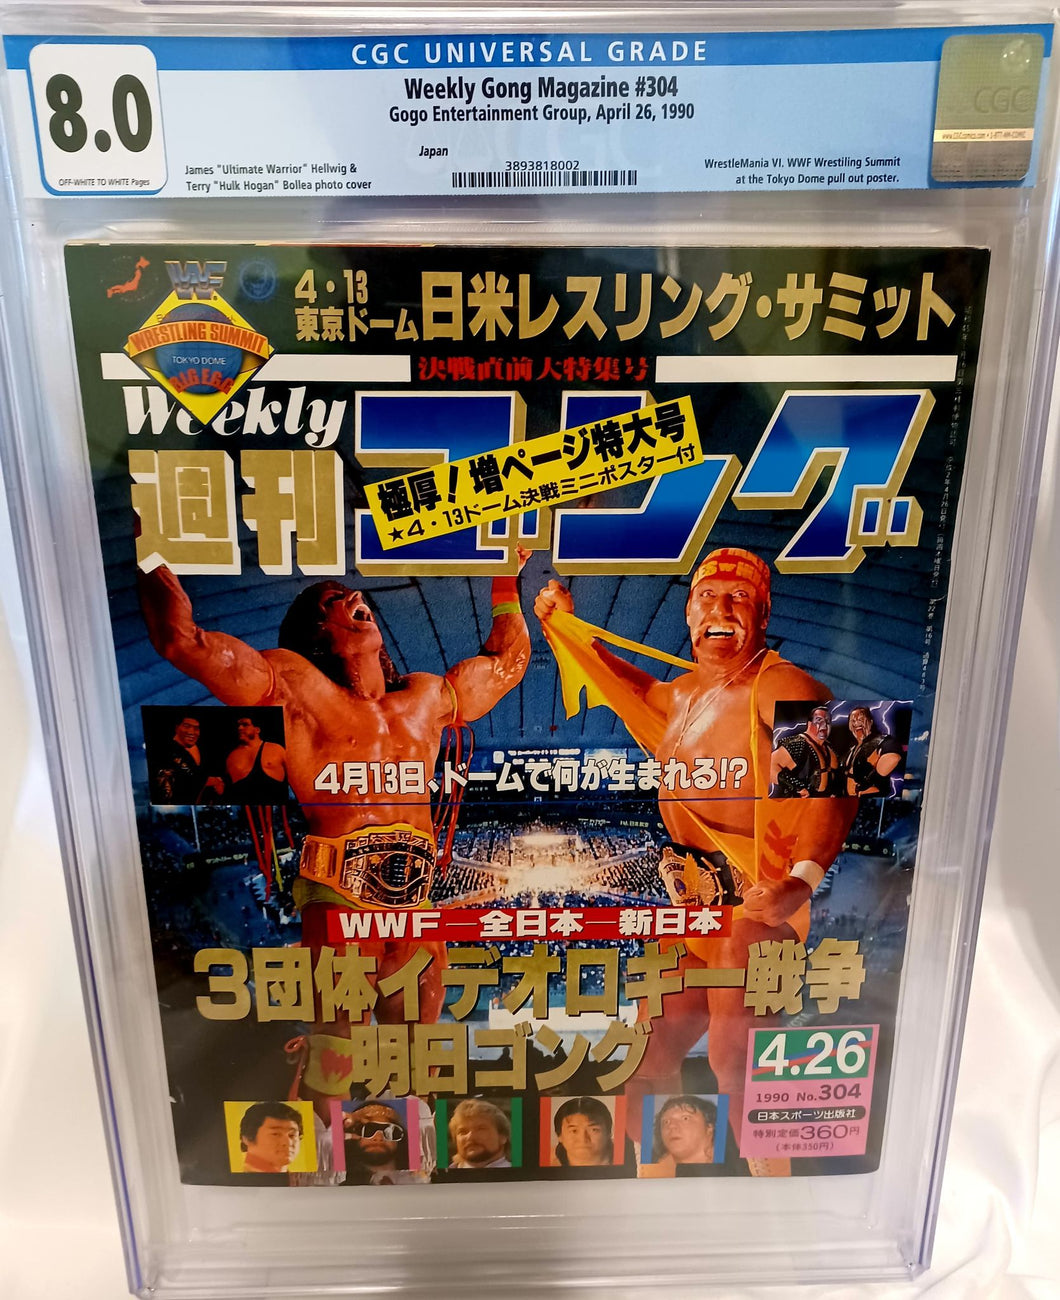 Weekly Gong Magazine #304 CGC 8.0 - Hulk Hogan vs Ultimate Warrior WrestleMania VI preview